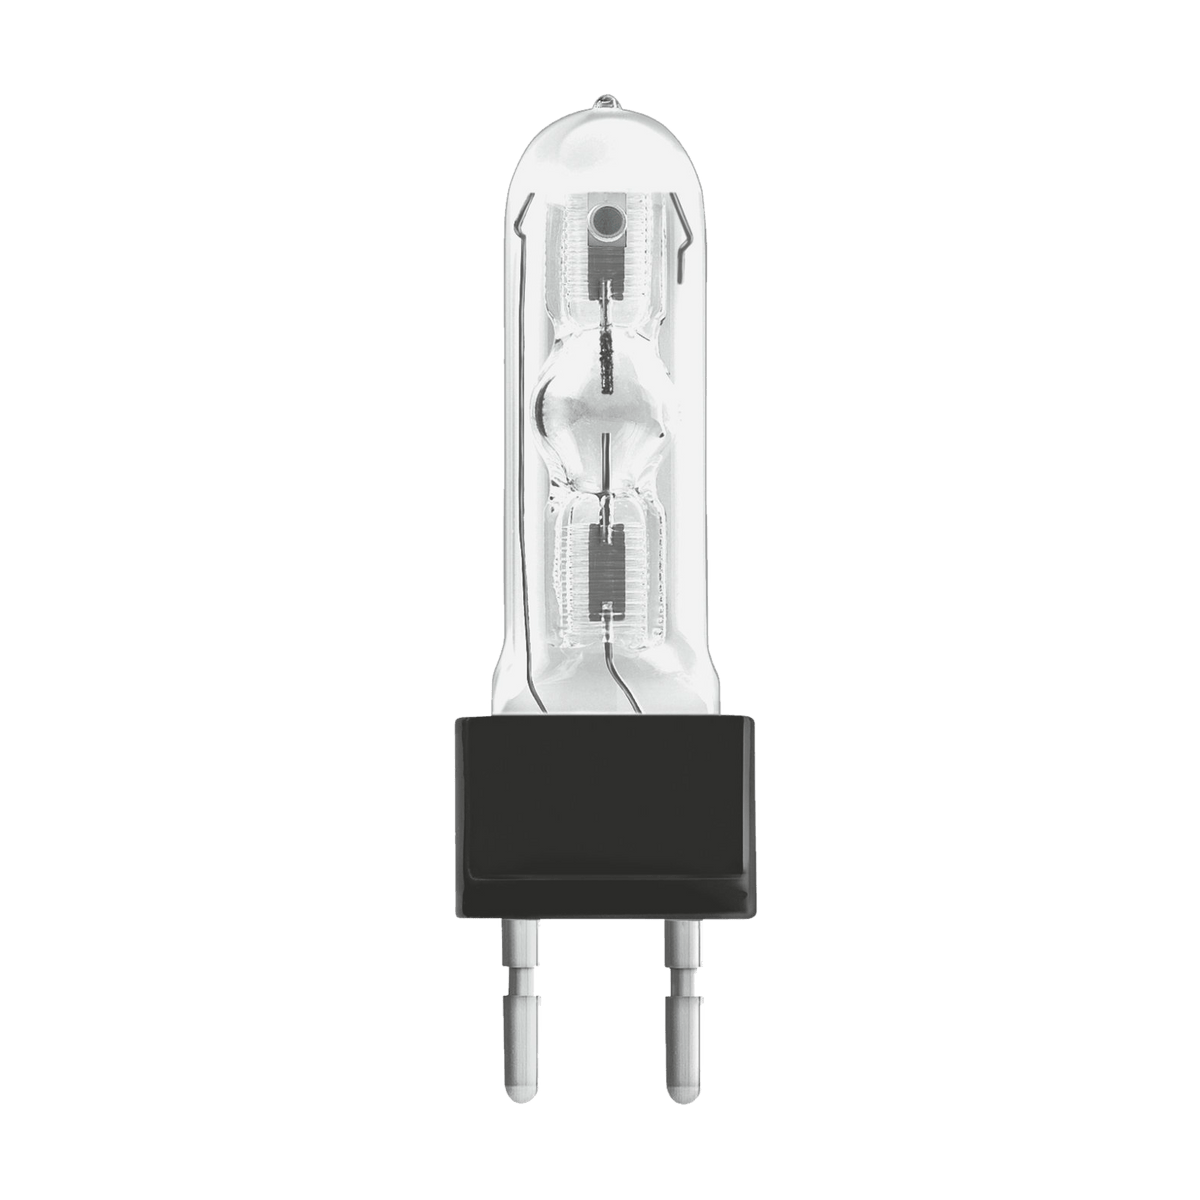 OSRAM HMI 575w EVENT UVS G22 Lamp